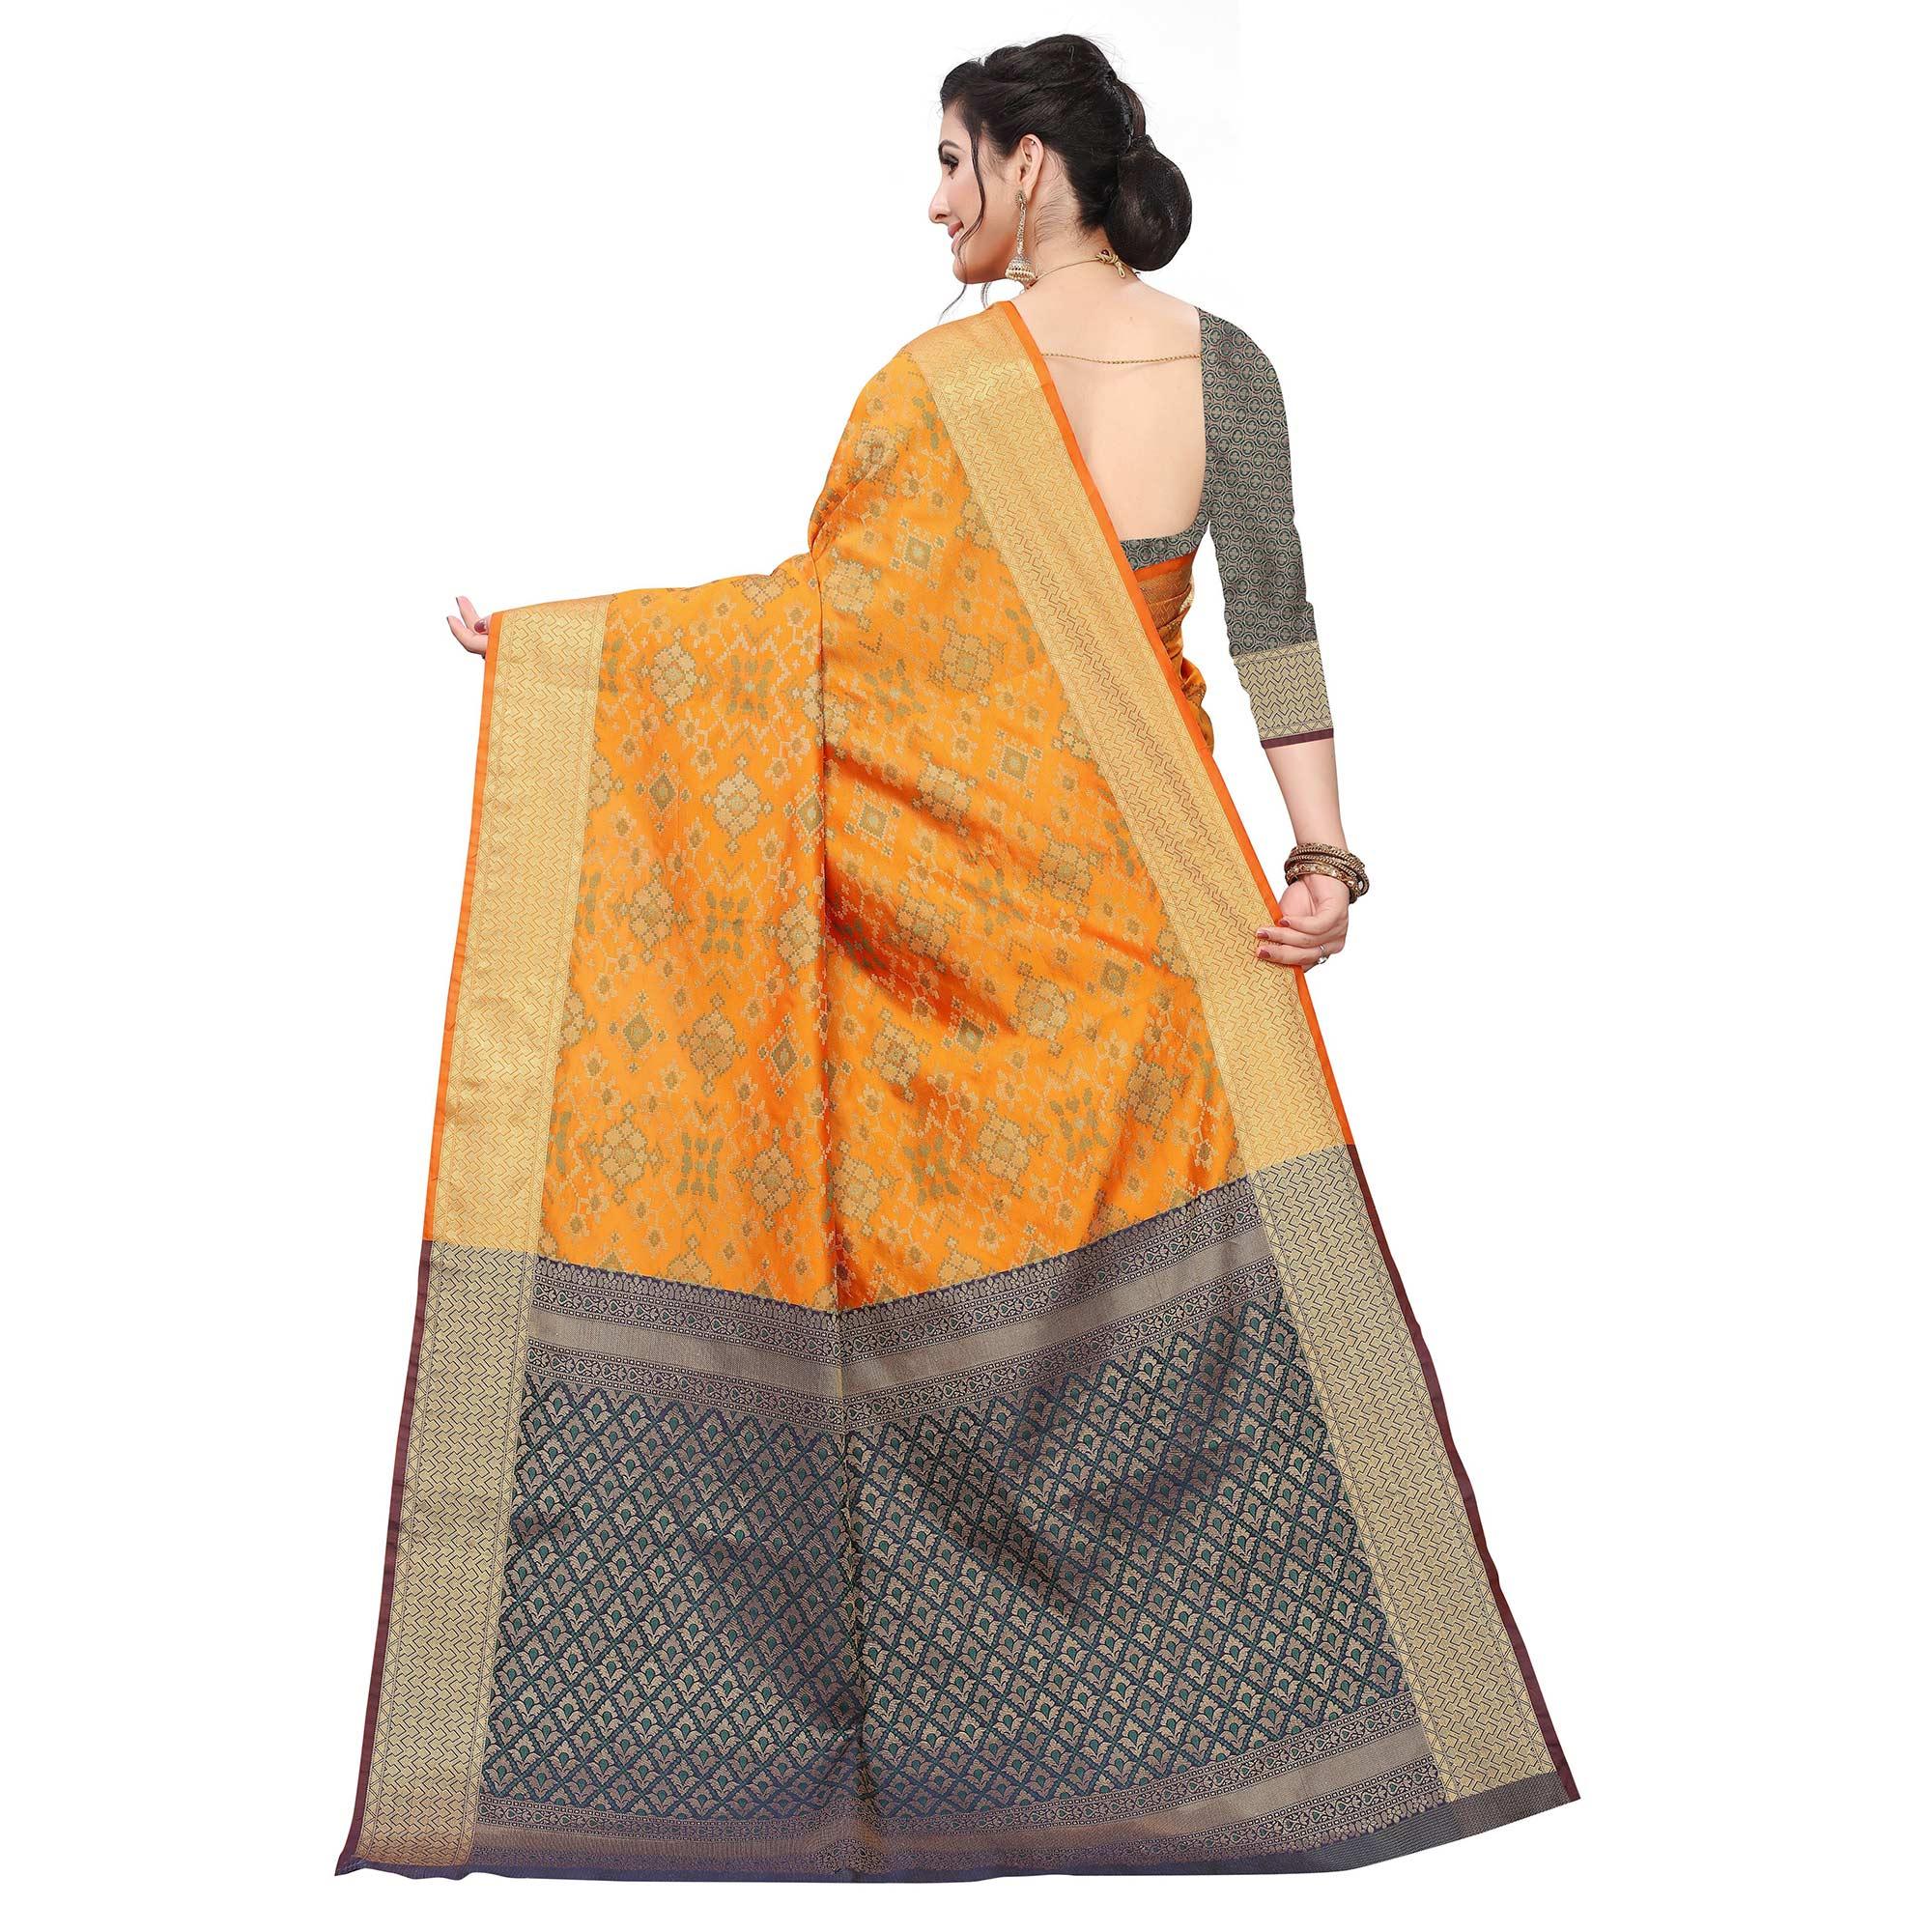 Engrossing Mustard Yellow Colored Festive Wear Woven Kanjivaram Silk Saree - Peachmode